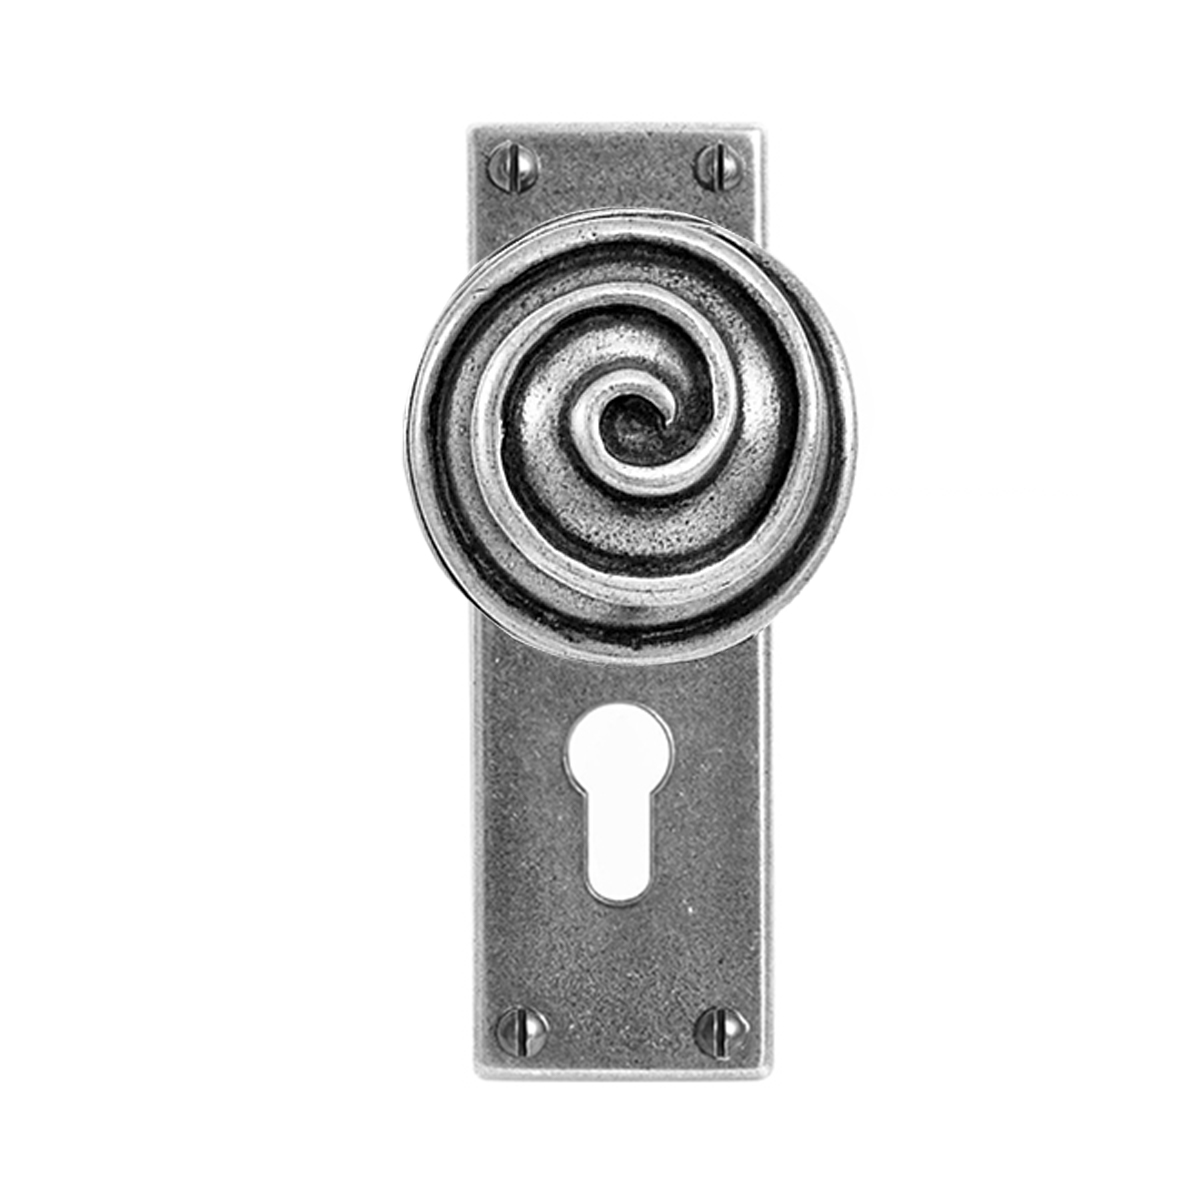 Swirl pewter door knob - locking